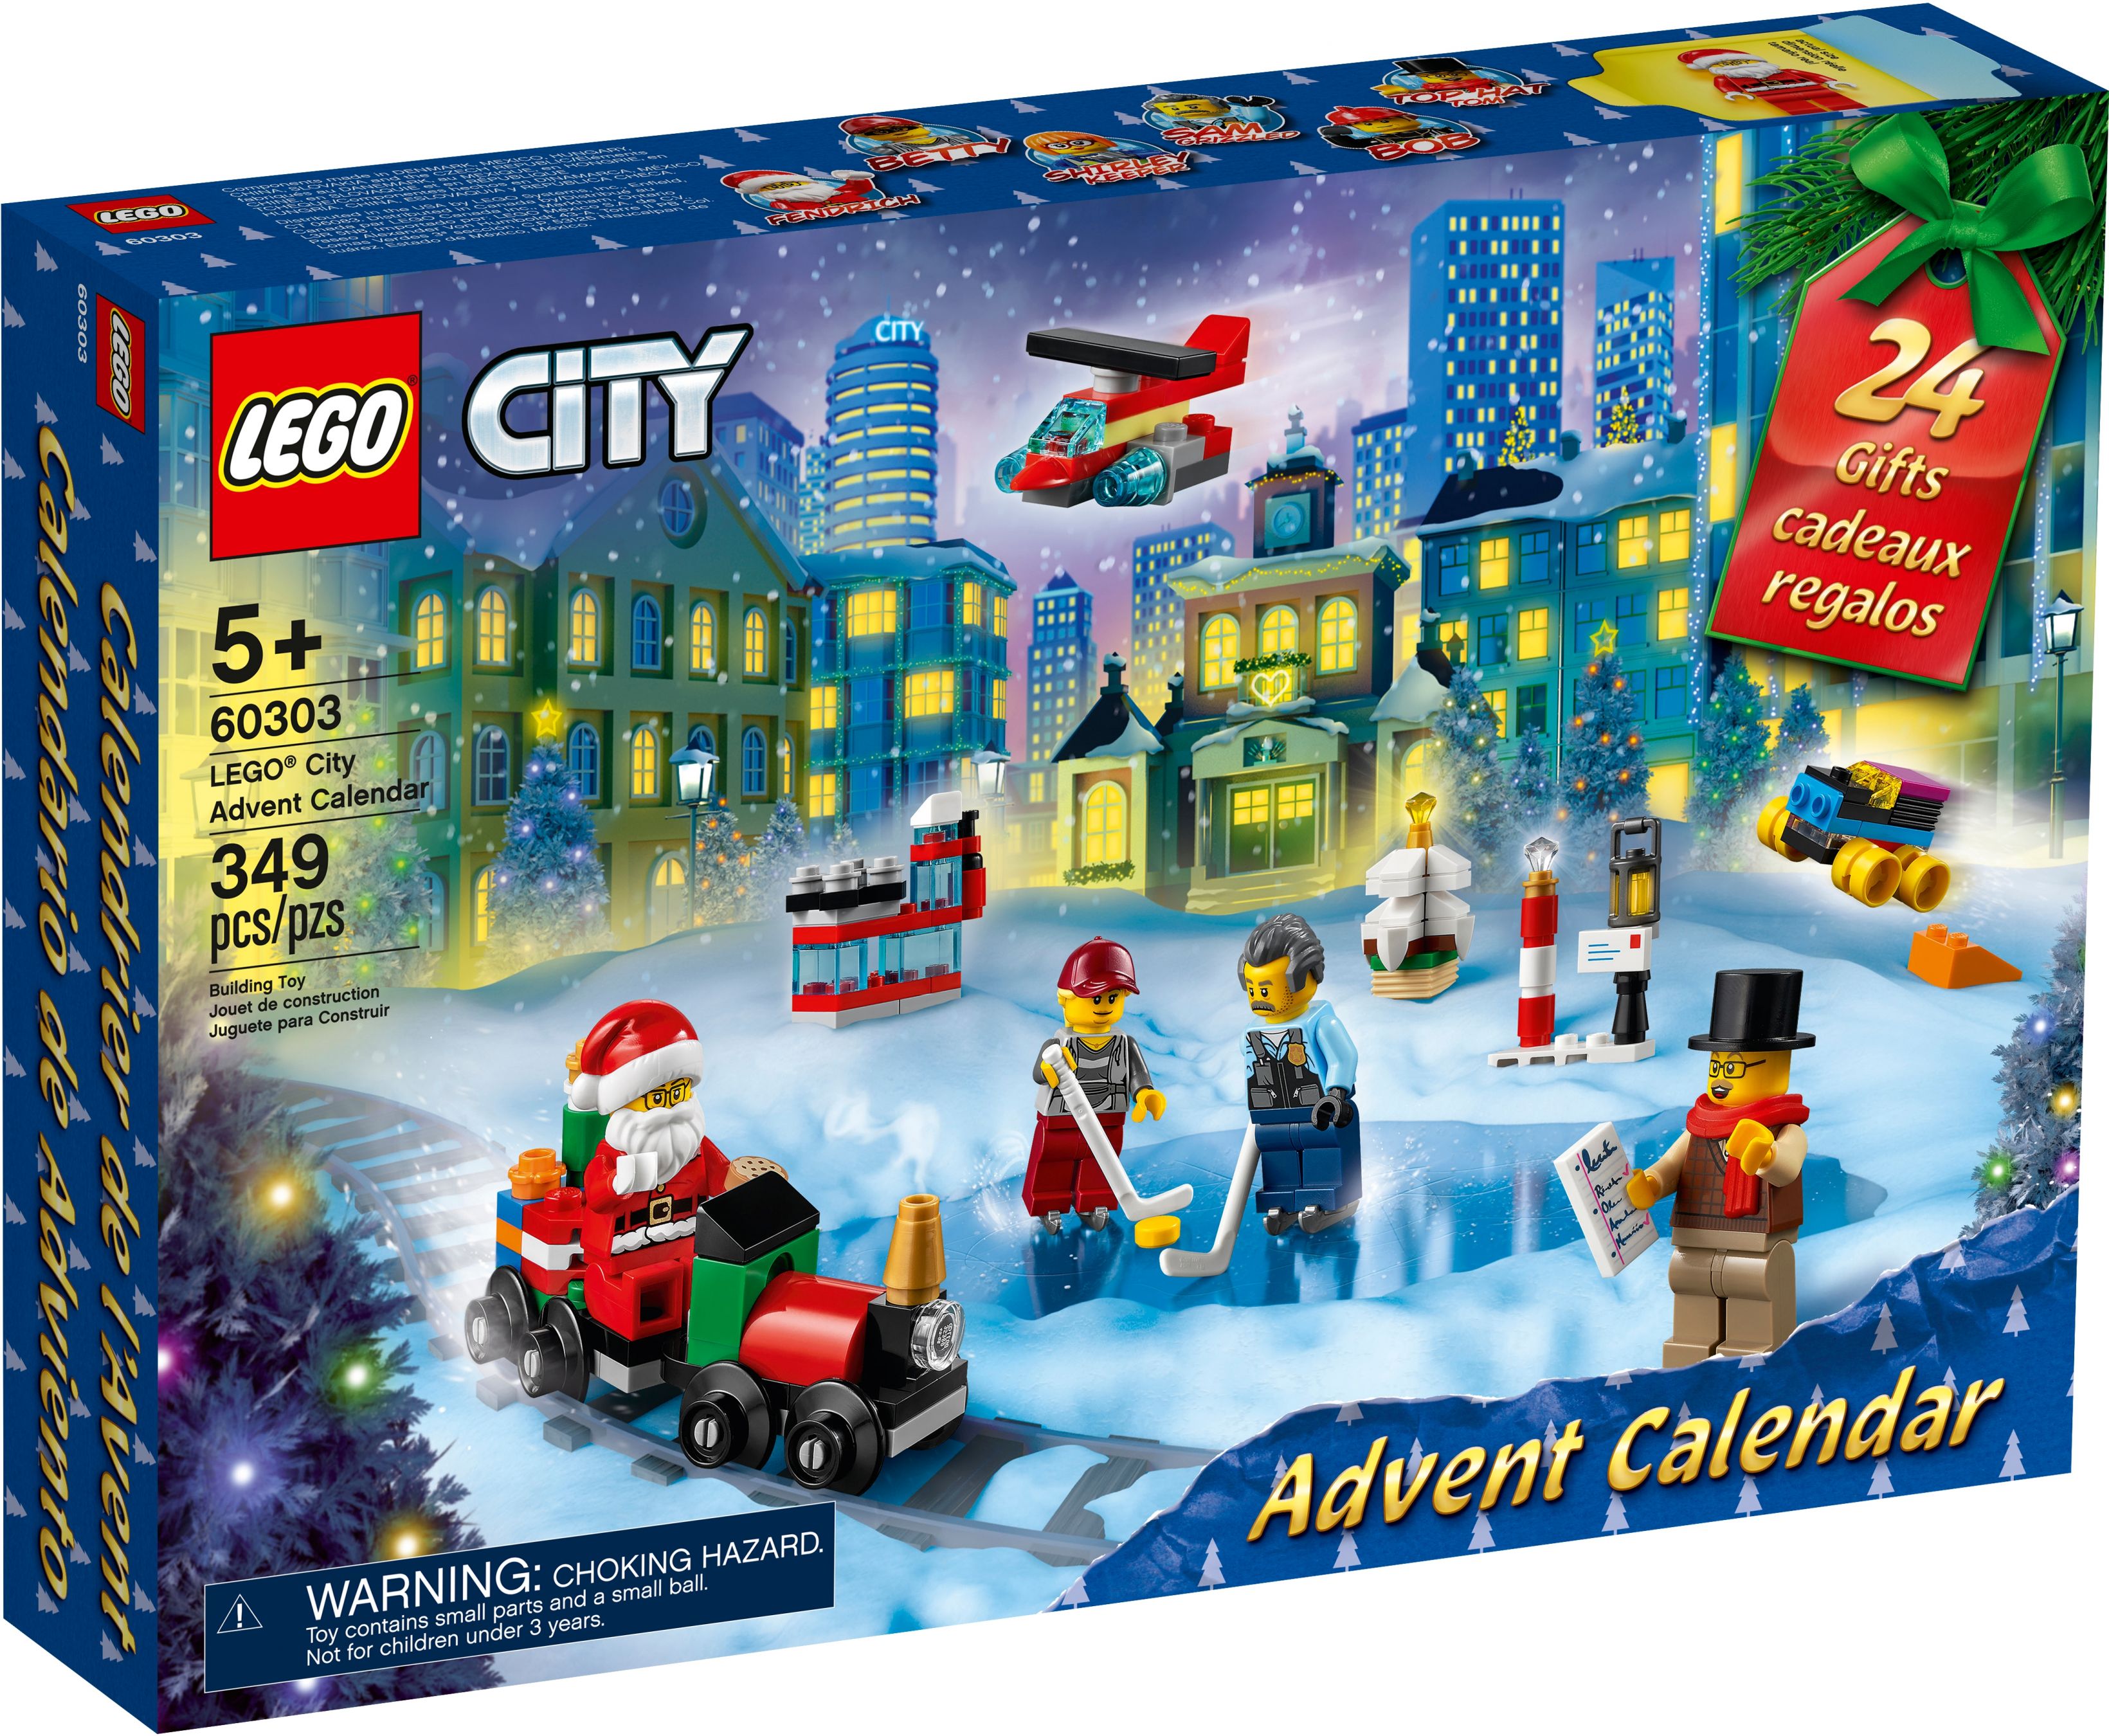 LEGO City 60303 LEGO® City Adventskalender LEGO_60303_alt1.jpg